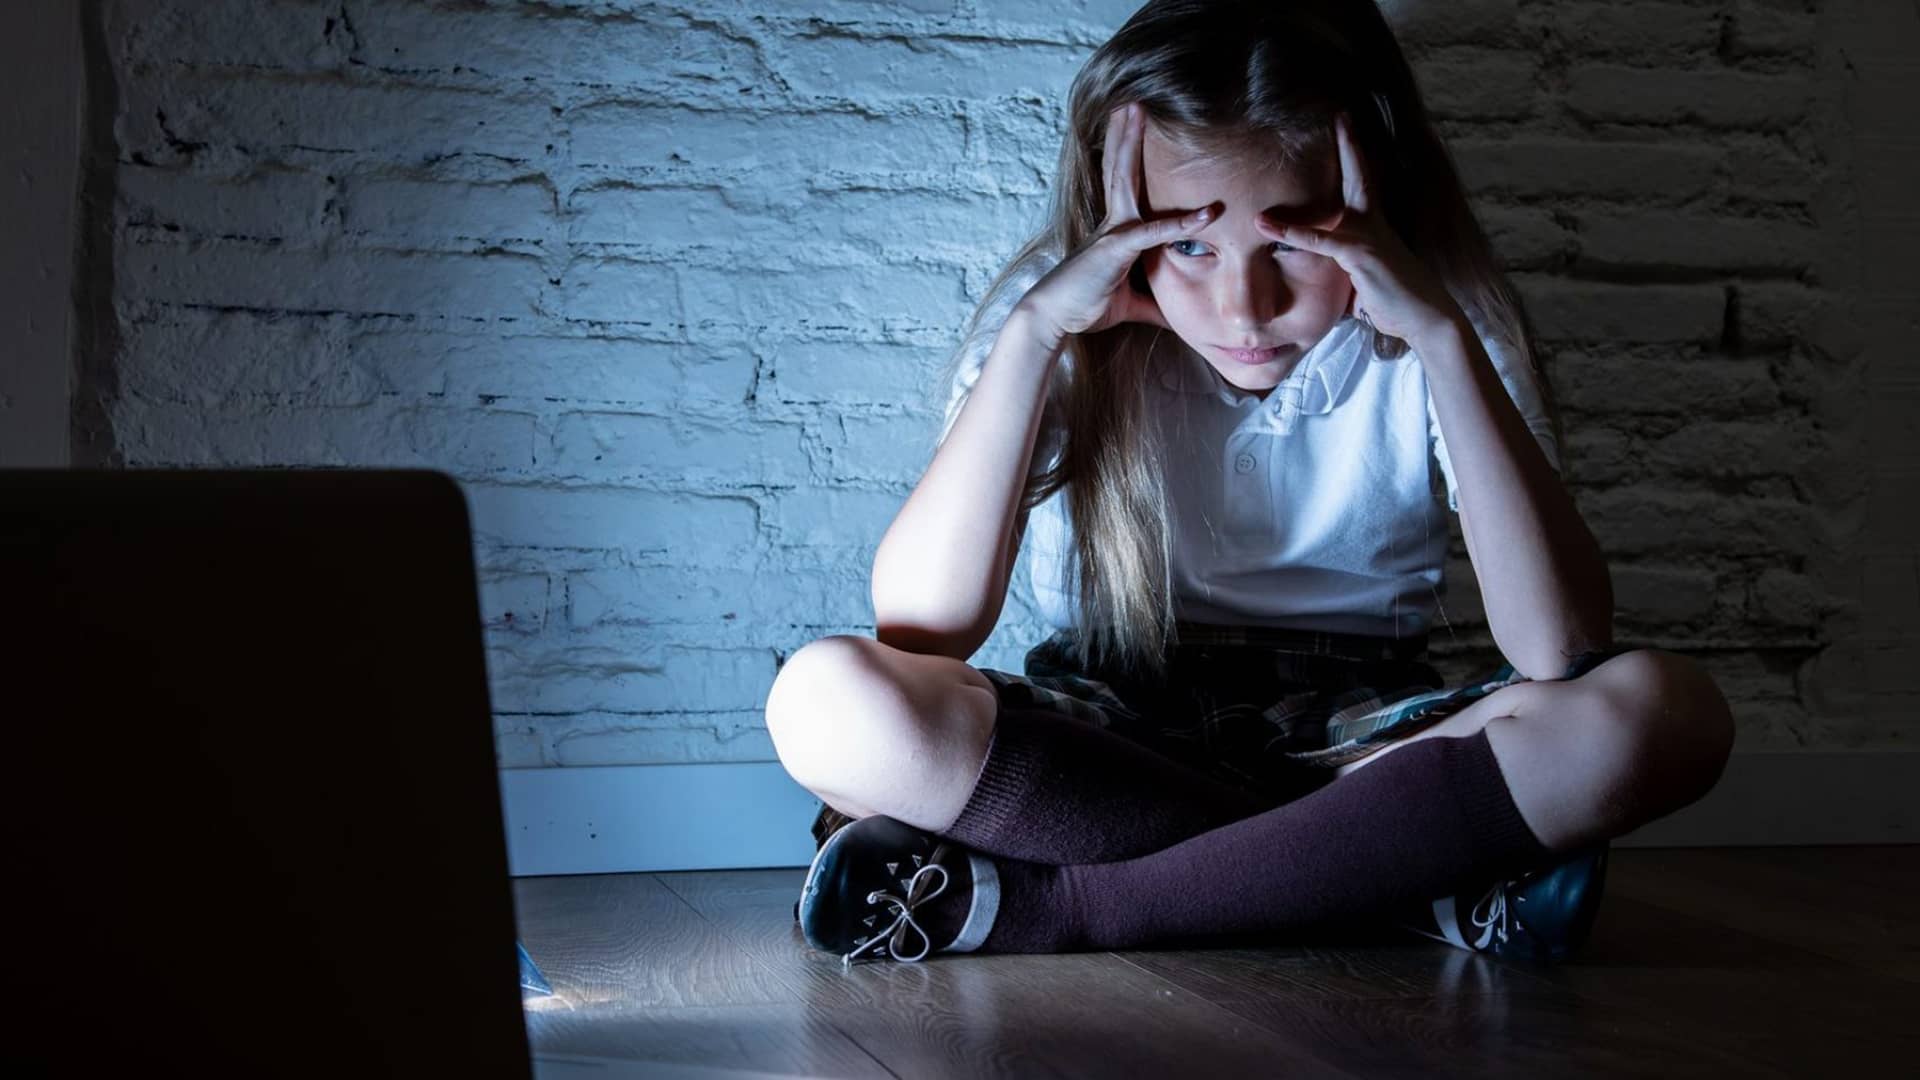 Sexting abuso sexual pornografia infantil netSegura